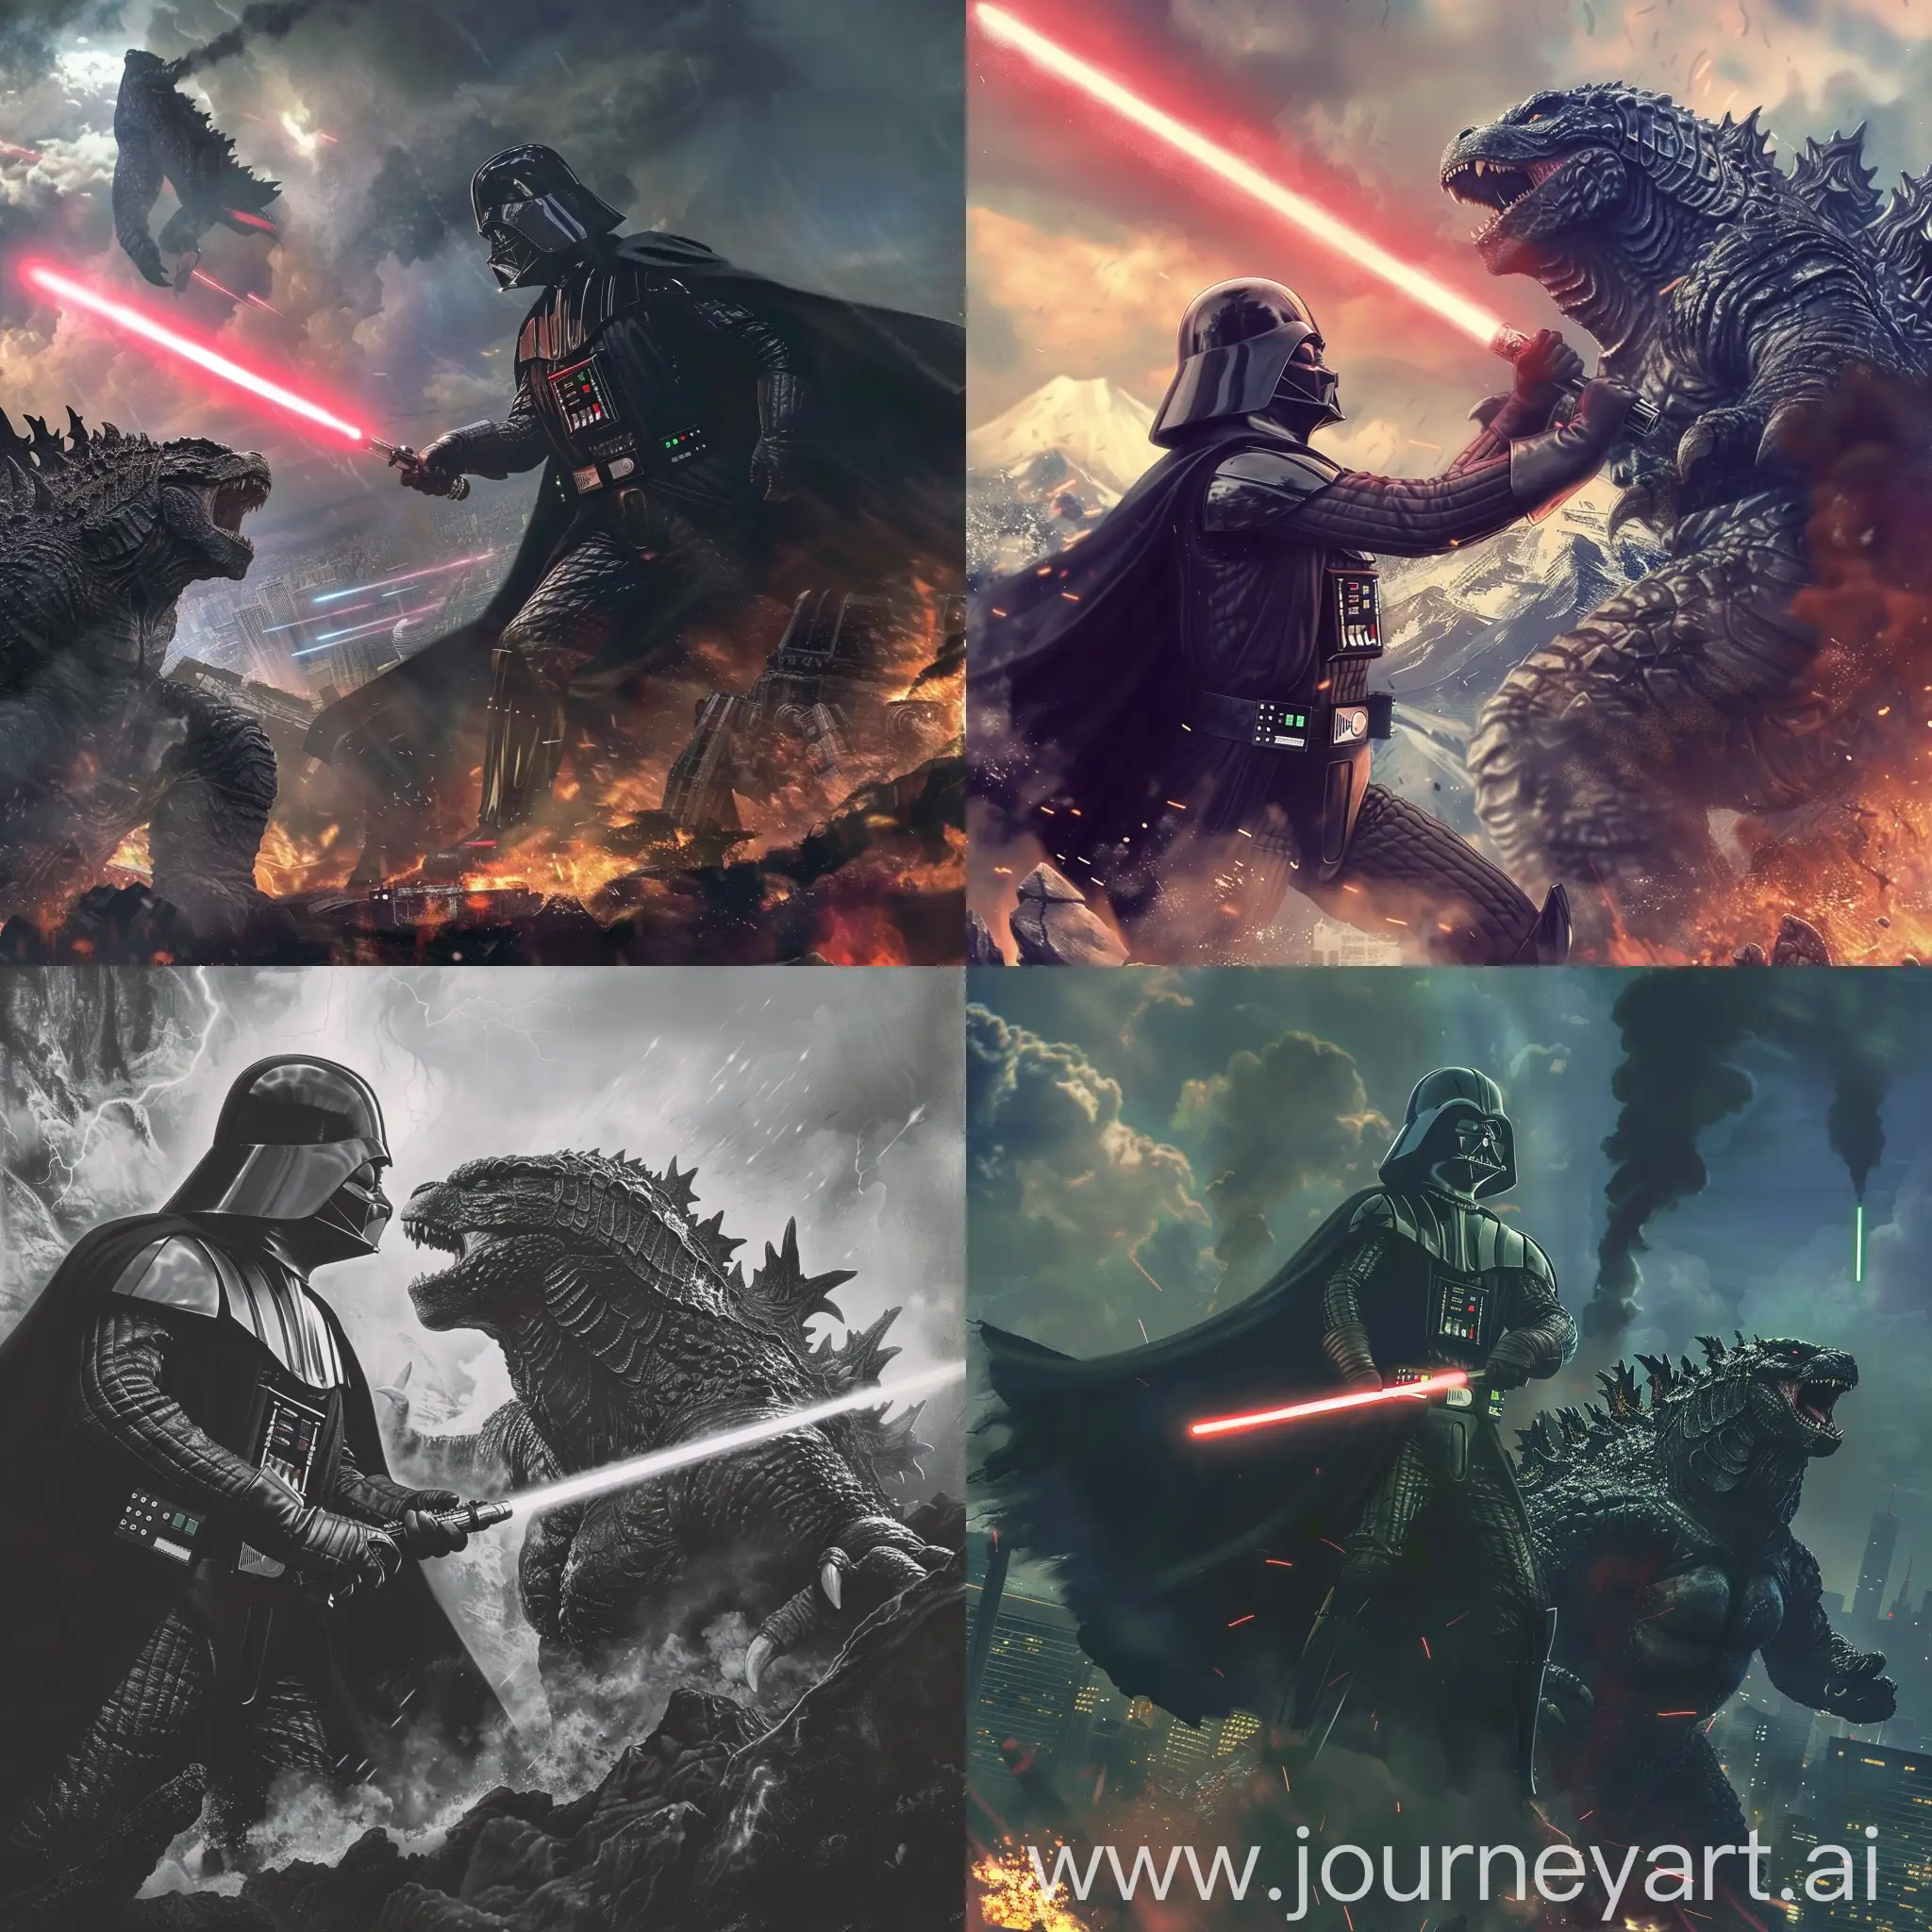 Epic-Battle-Darth-Vader-vs-Godzilla